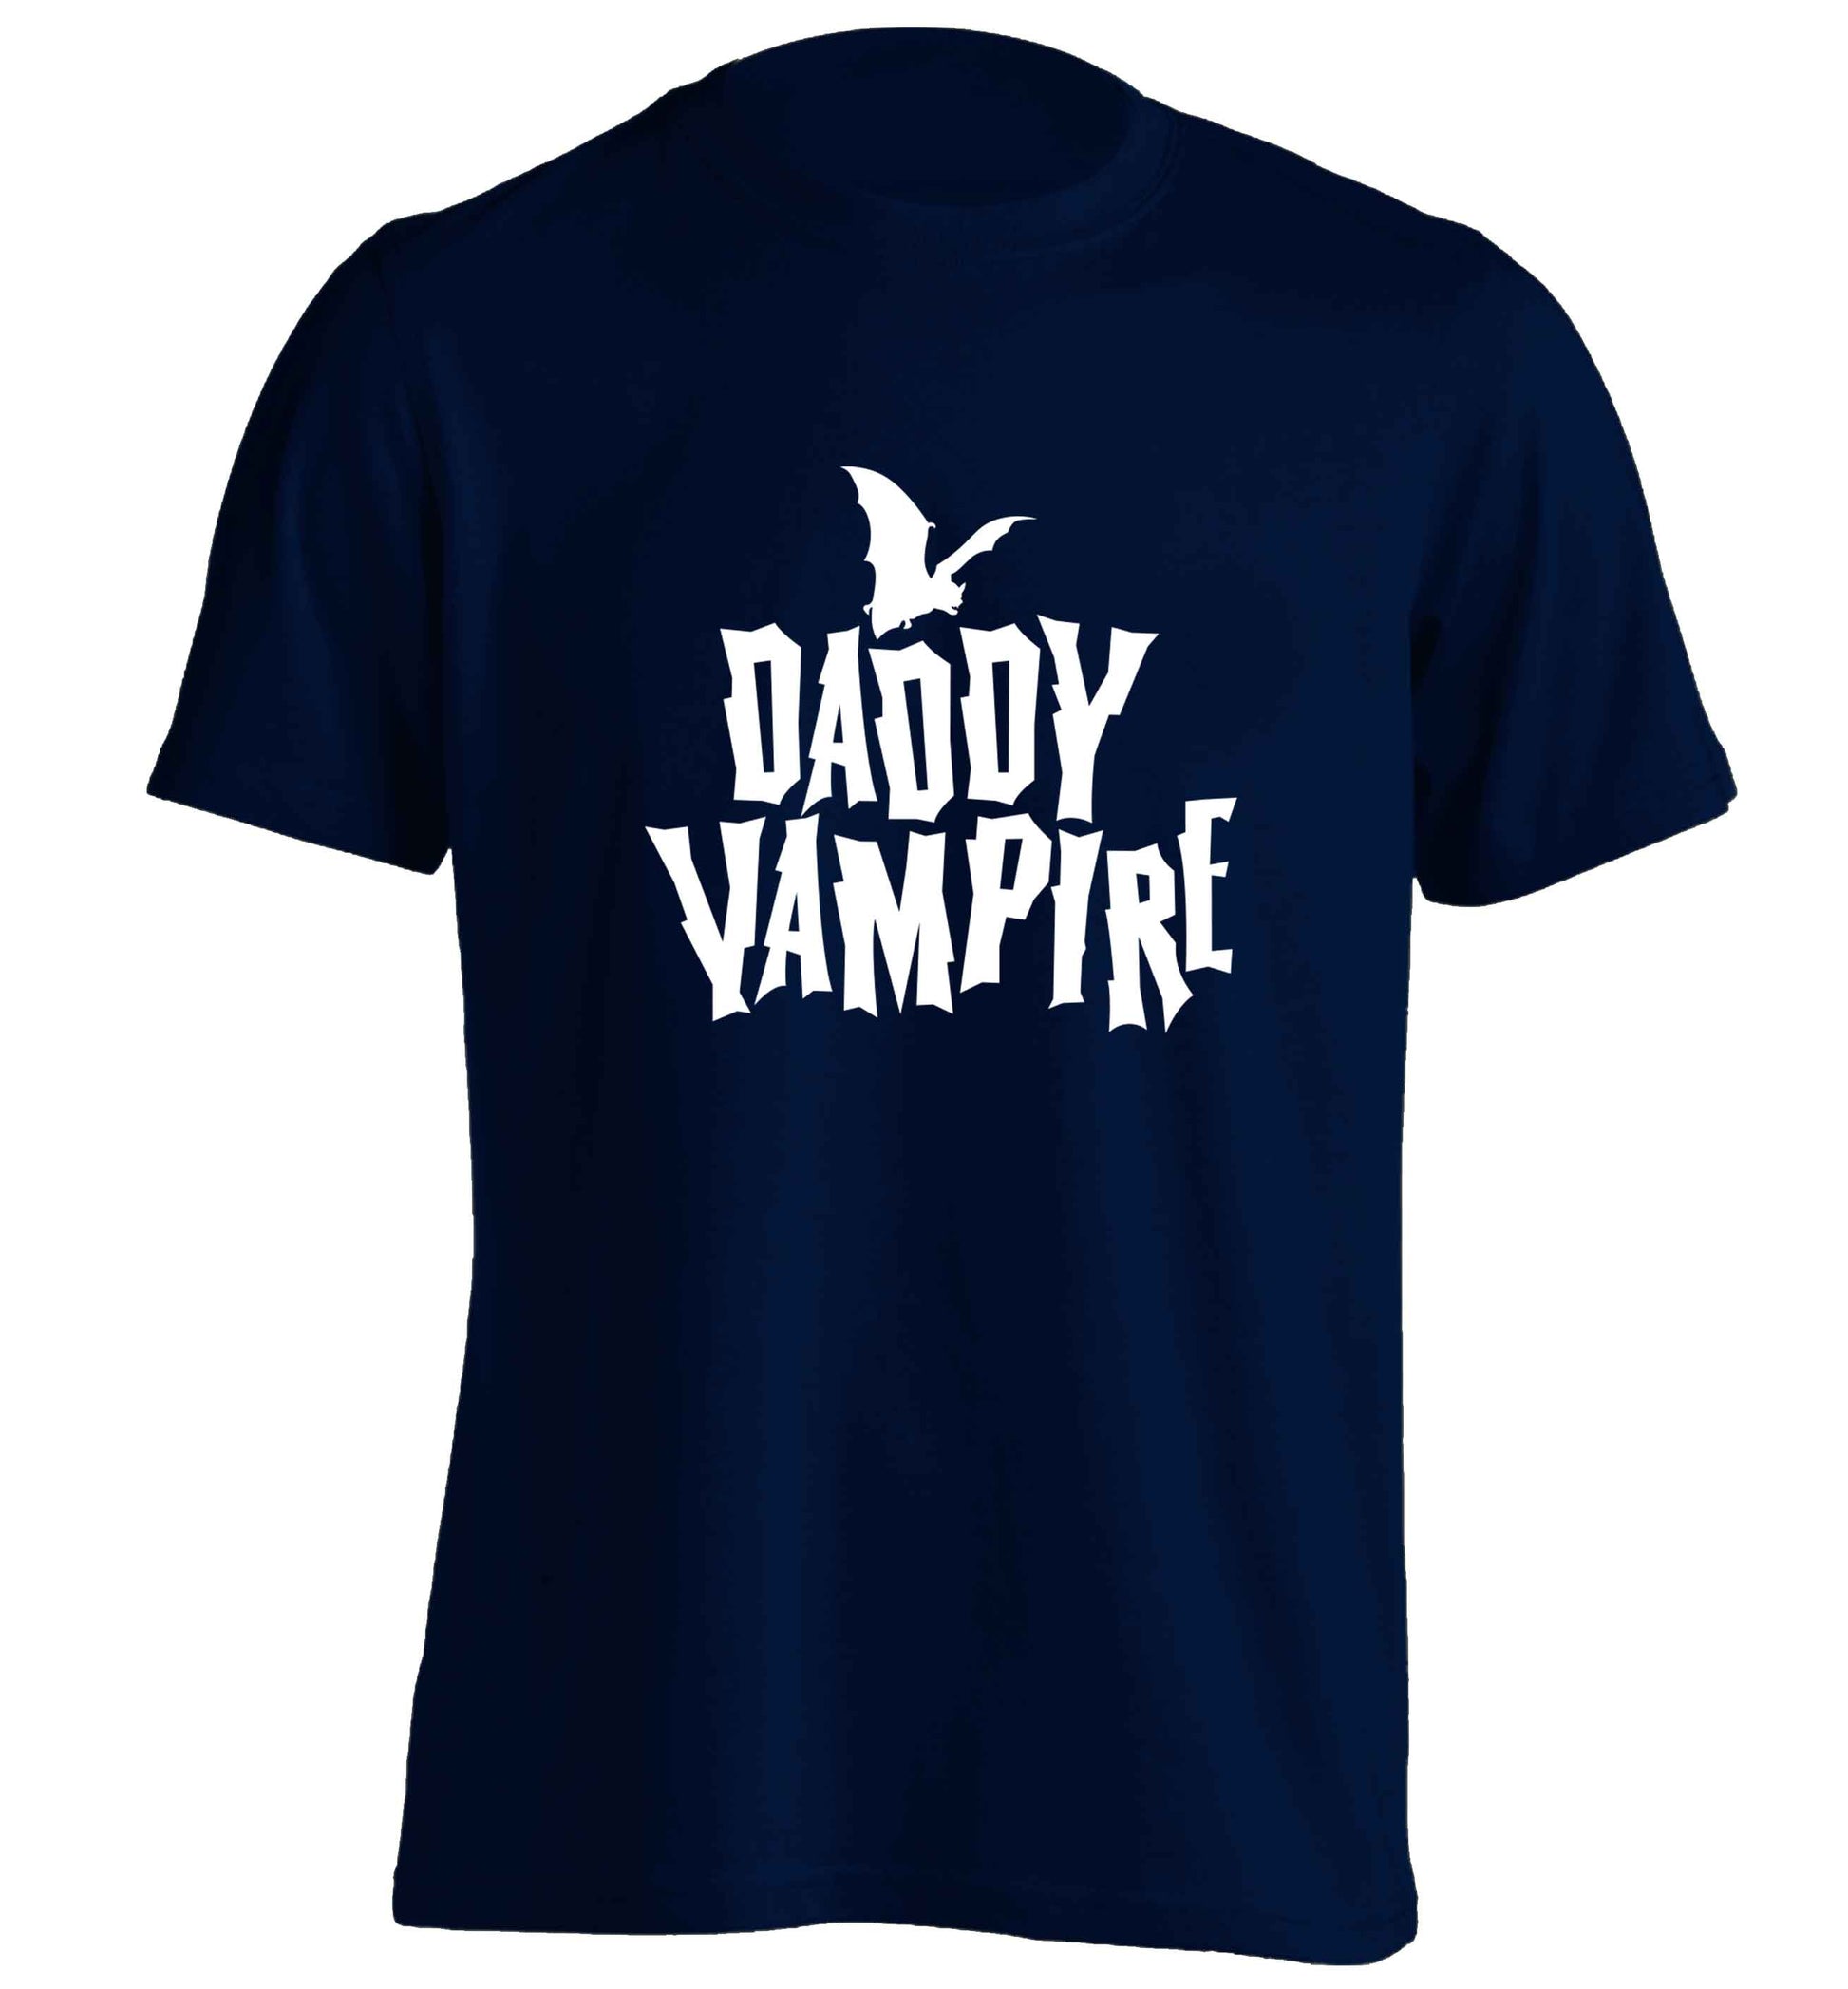 Daddy vampire adults unisex navy Tshirt 2XL